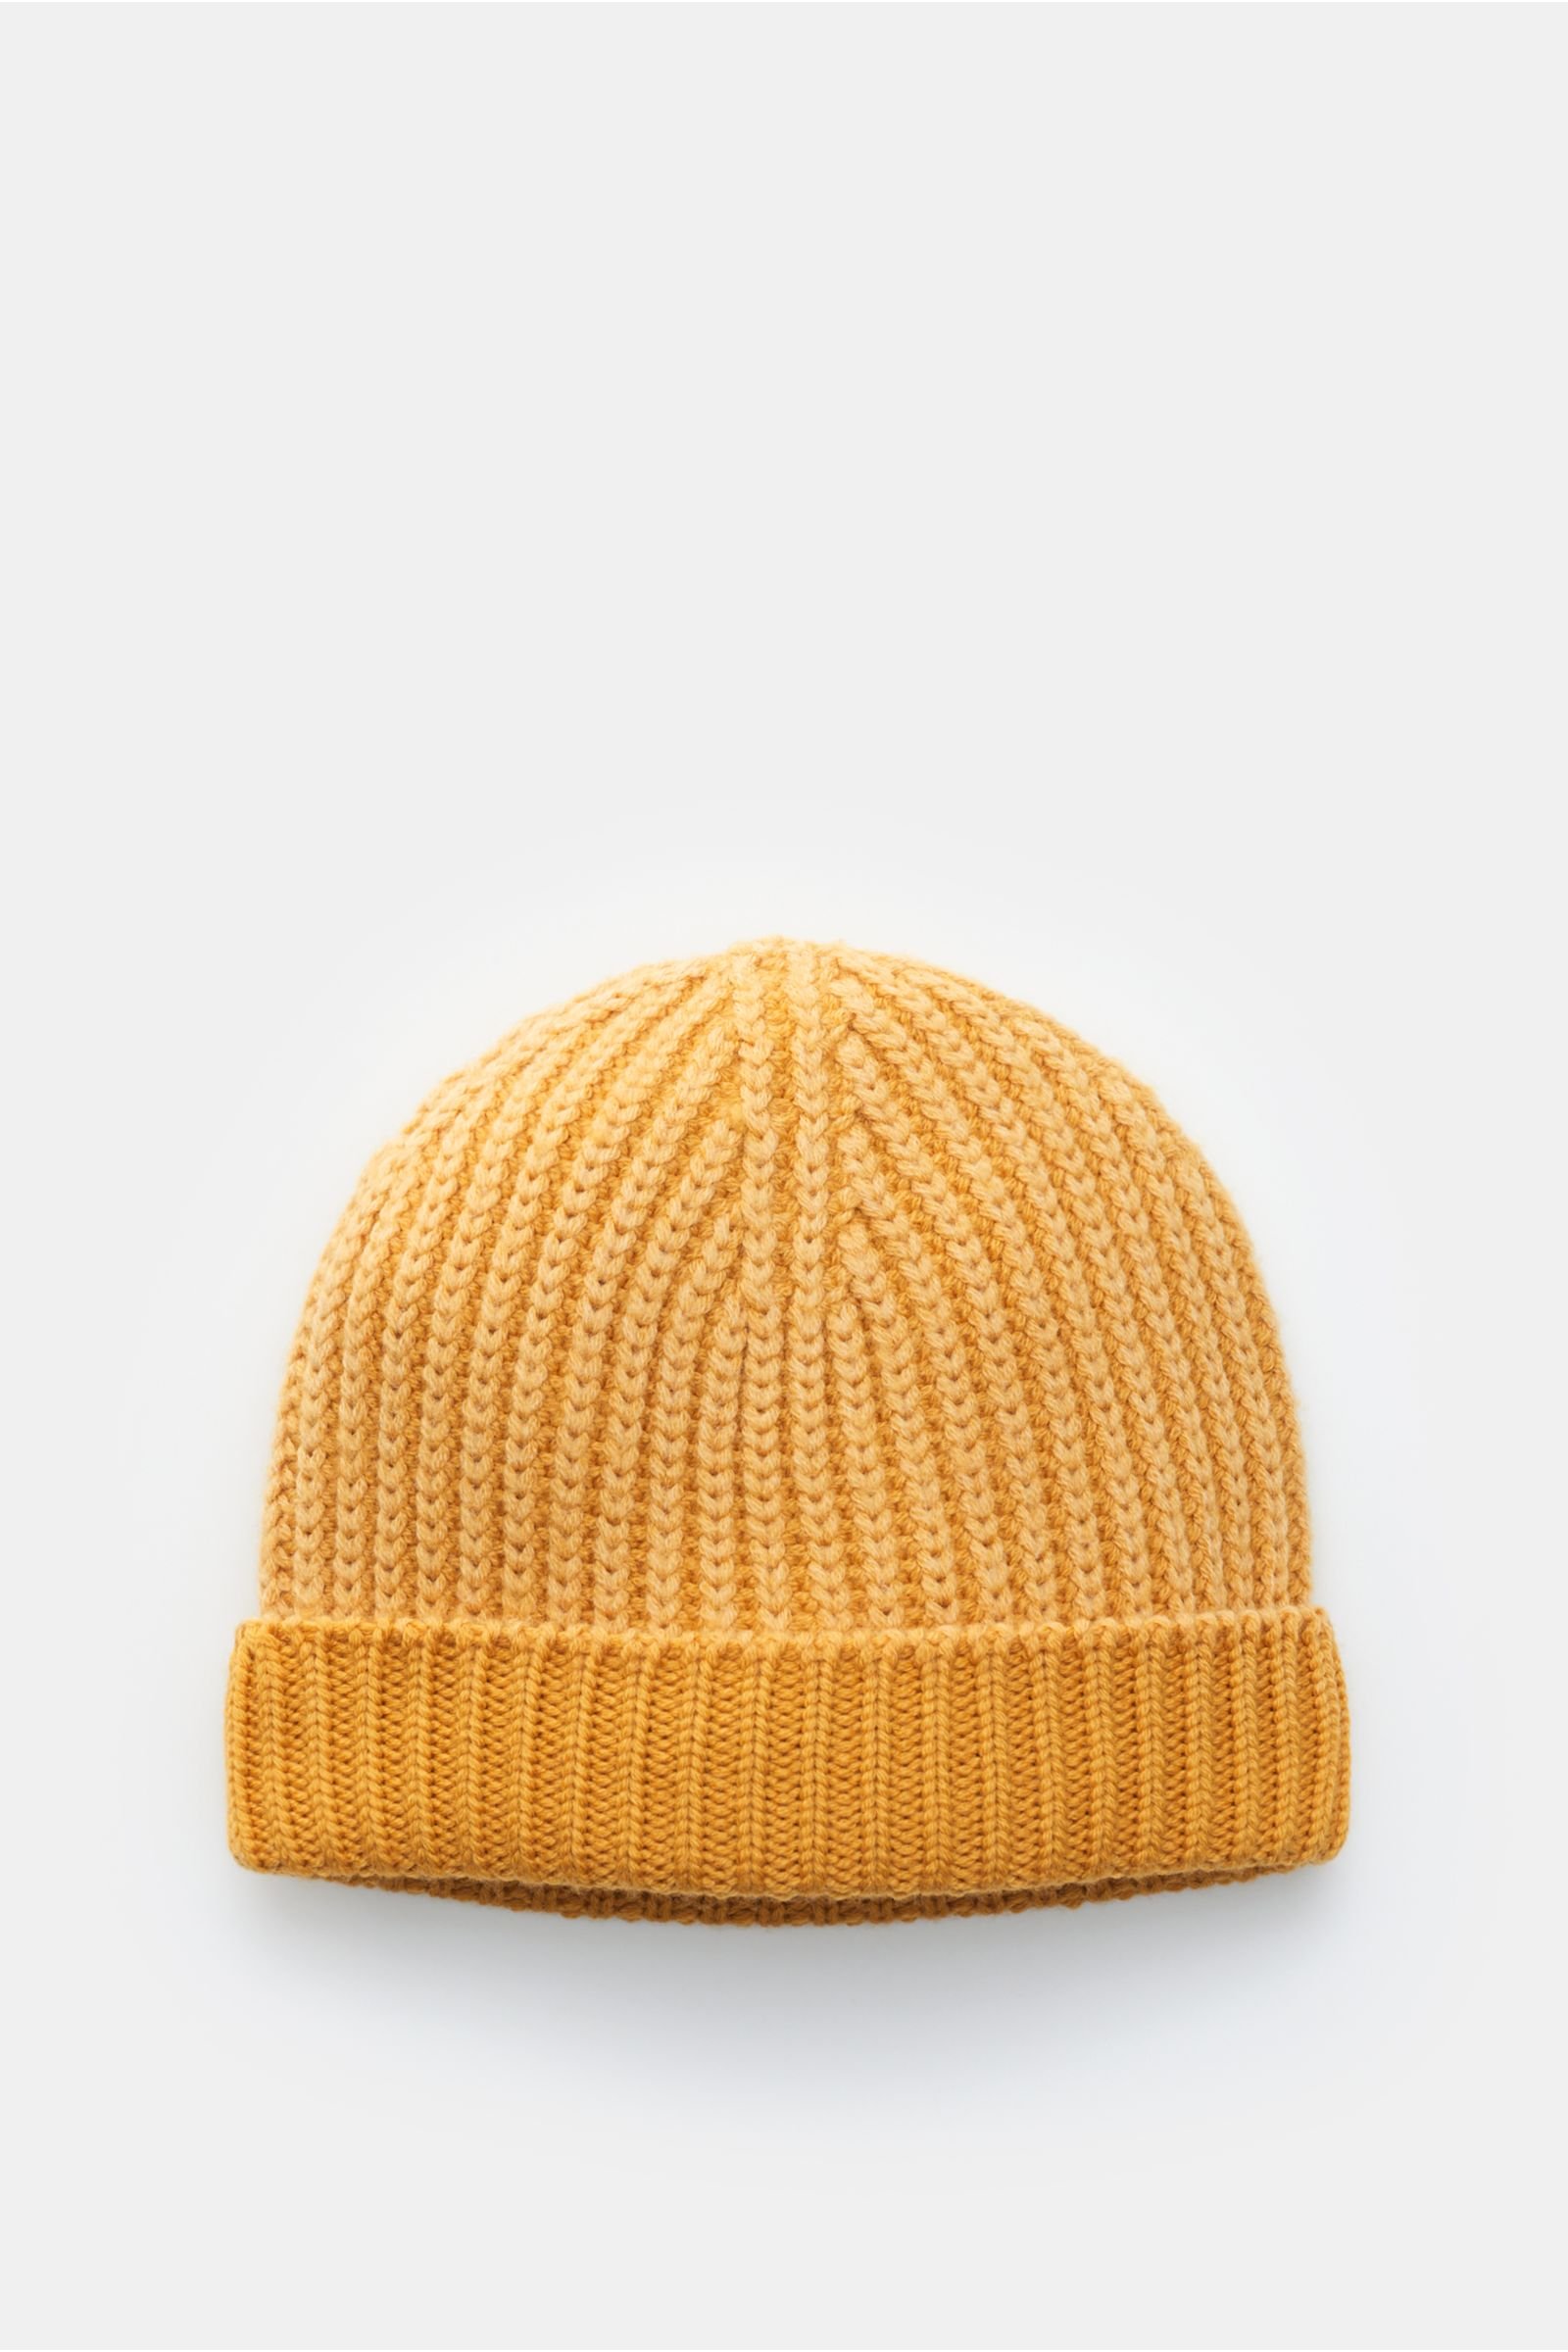 Wool beanie 'Foggy Hat' yellow